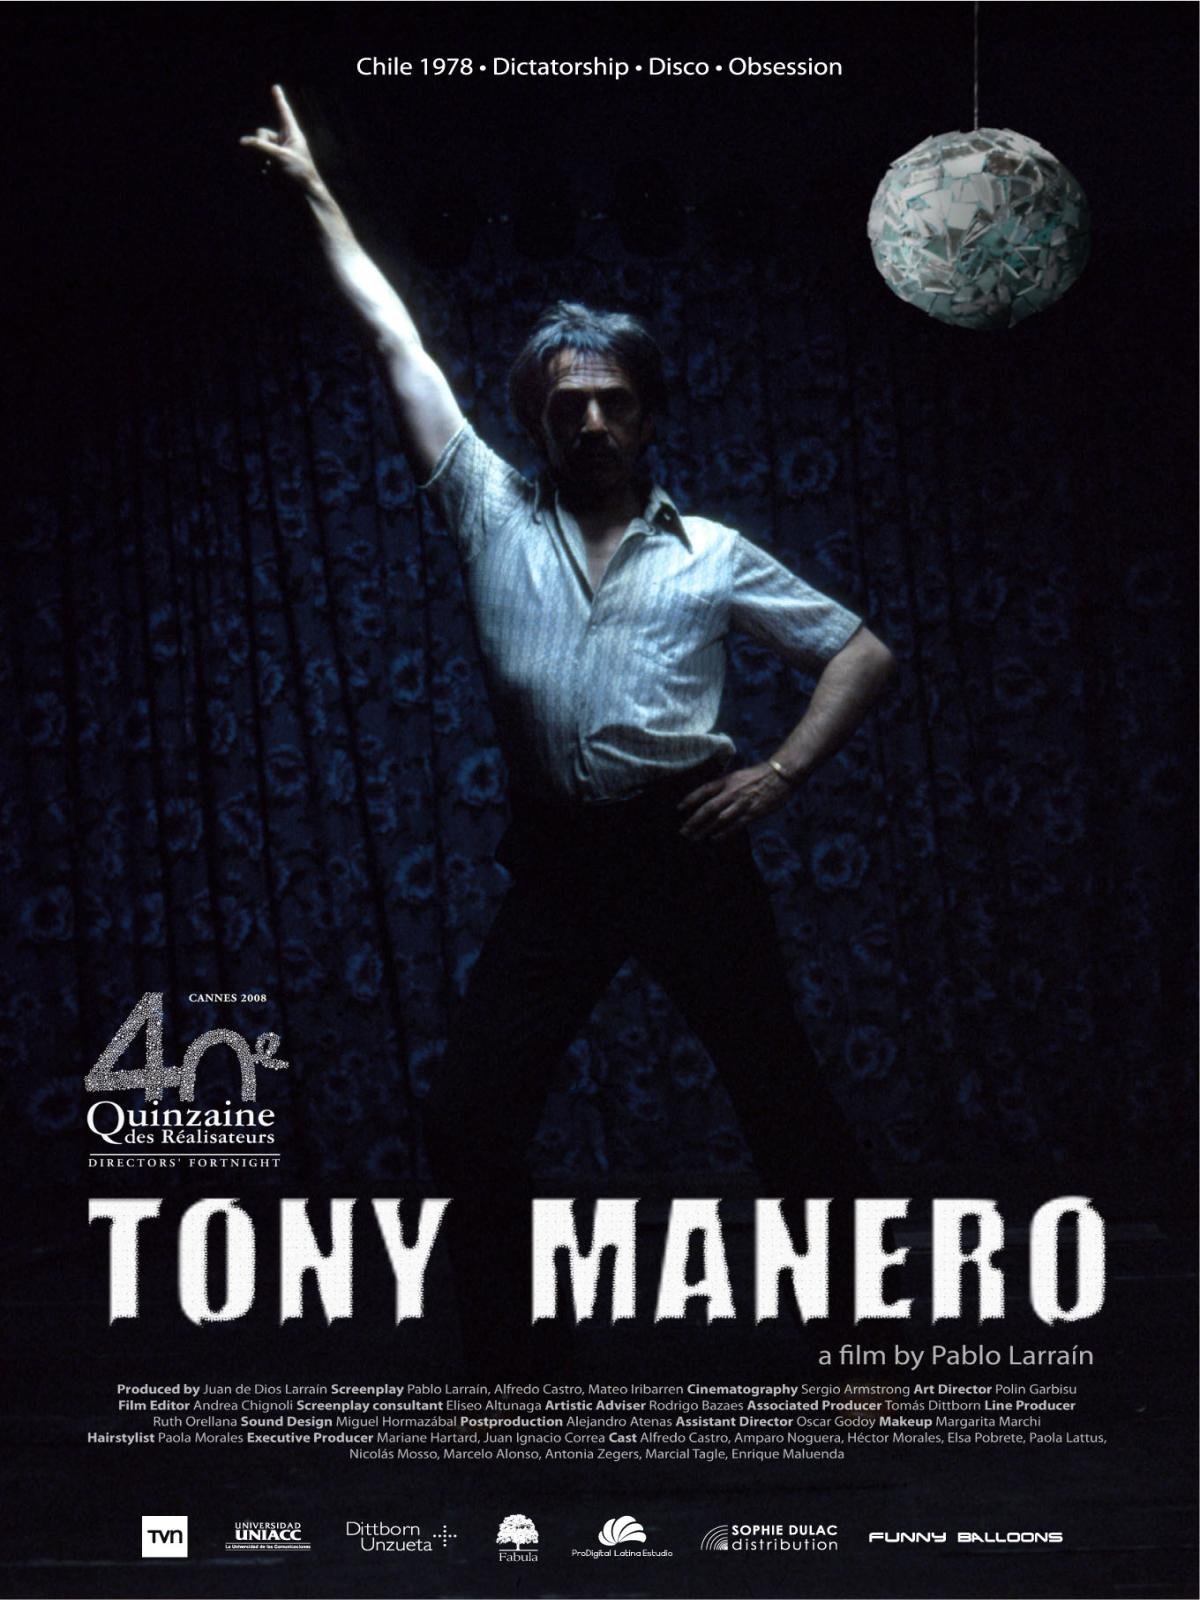 Tony Manero (Pablo Larraín, 2008) 